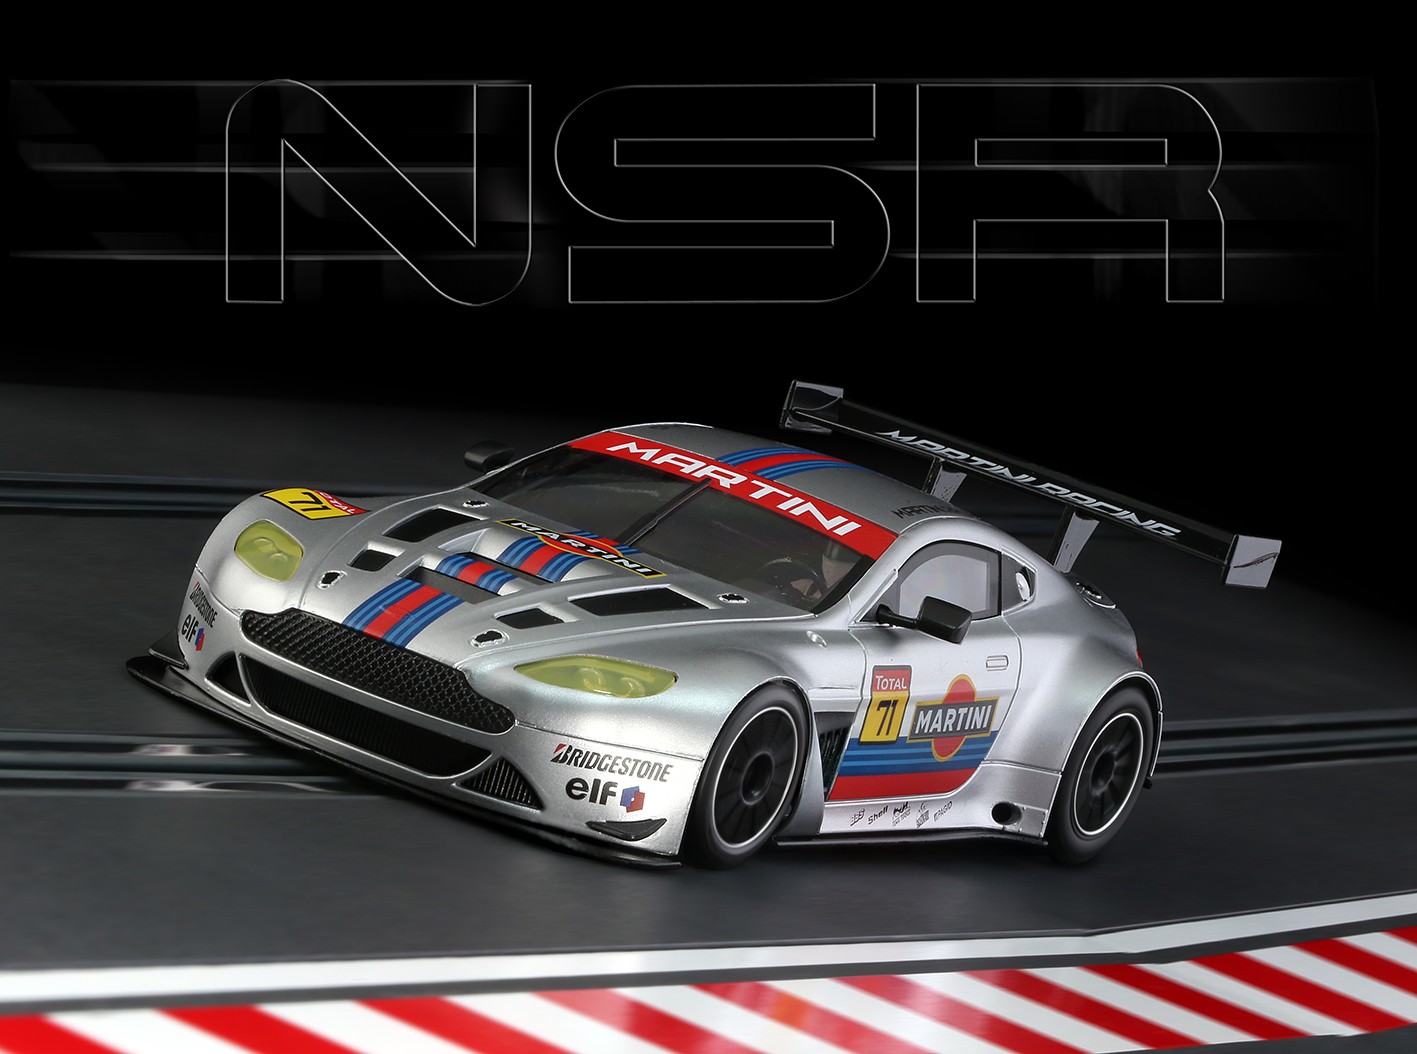 NSR - ASV GT3 #71, GT Martini Prata - 0171AW